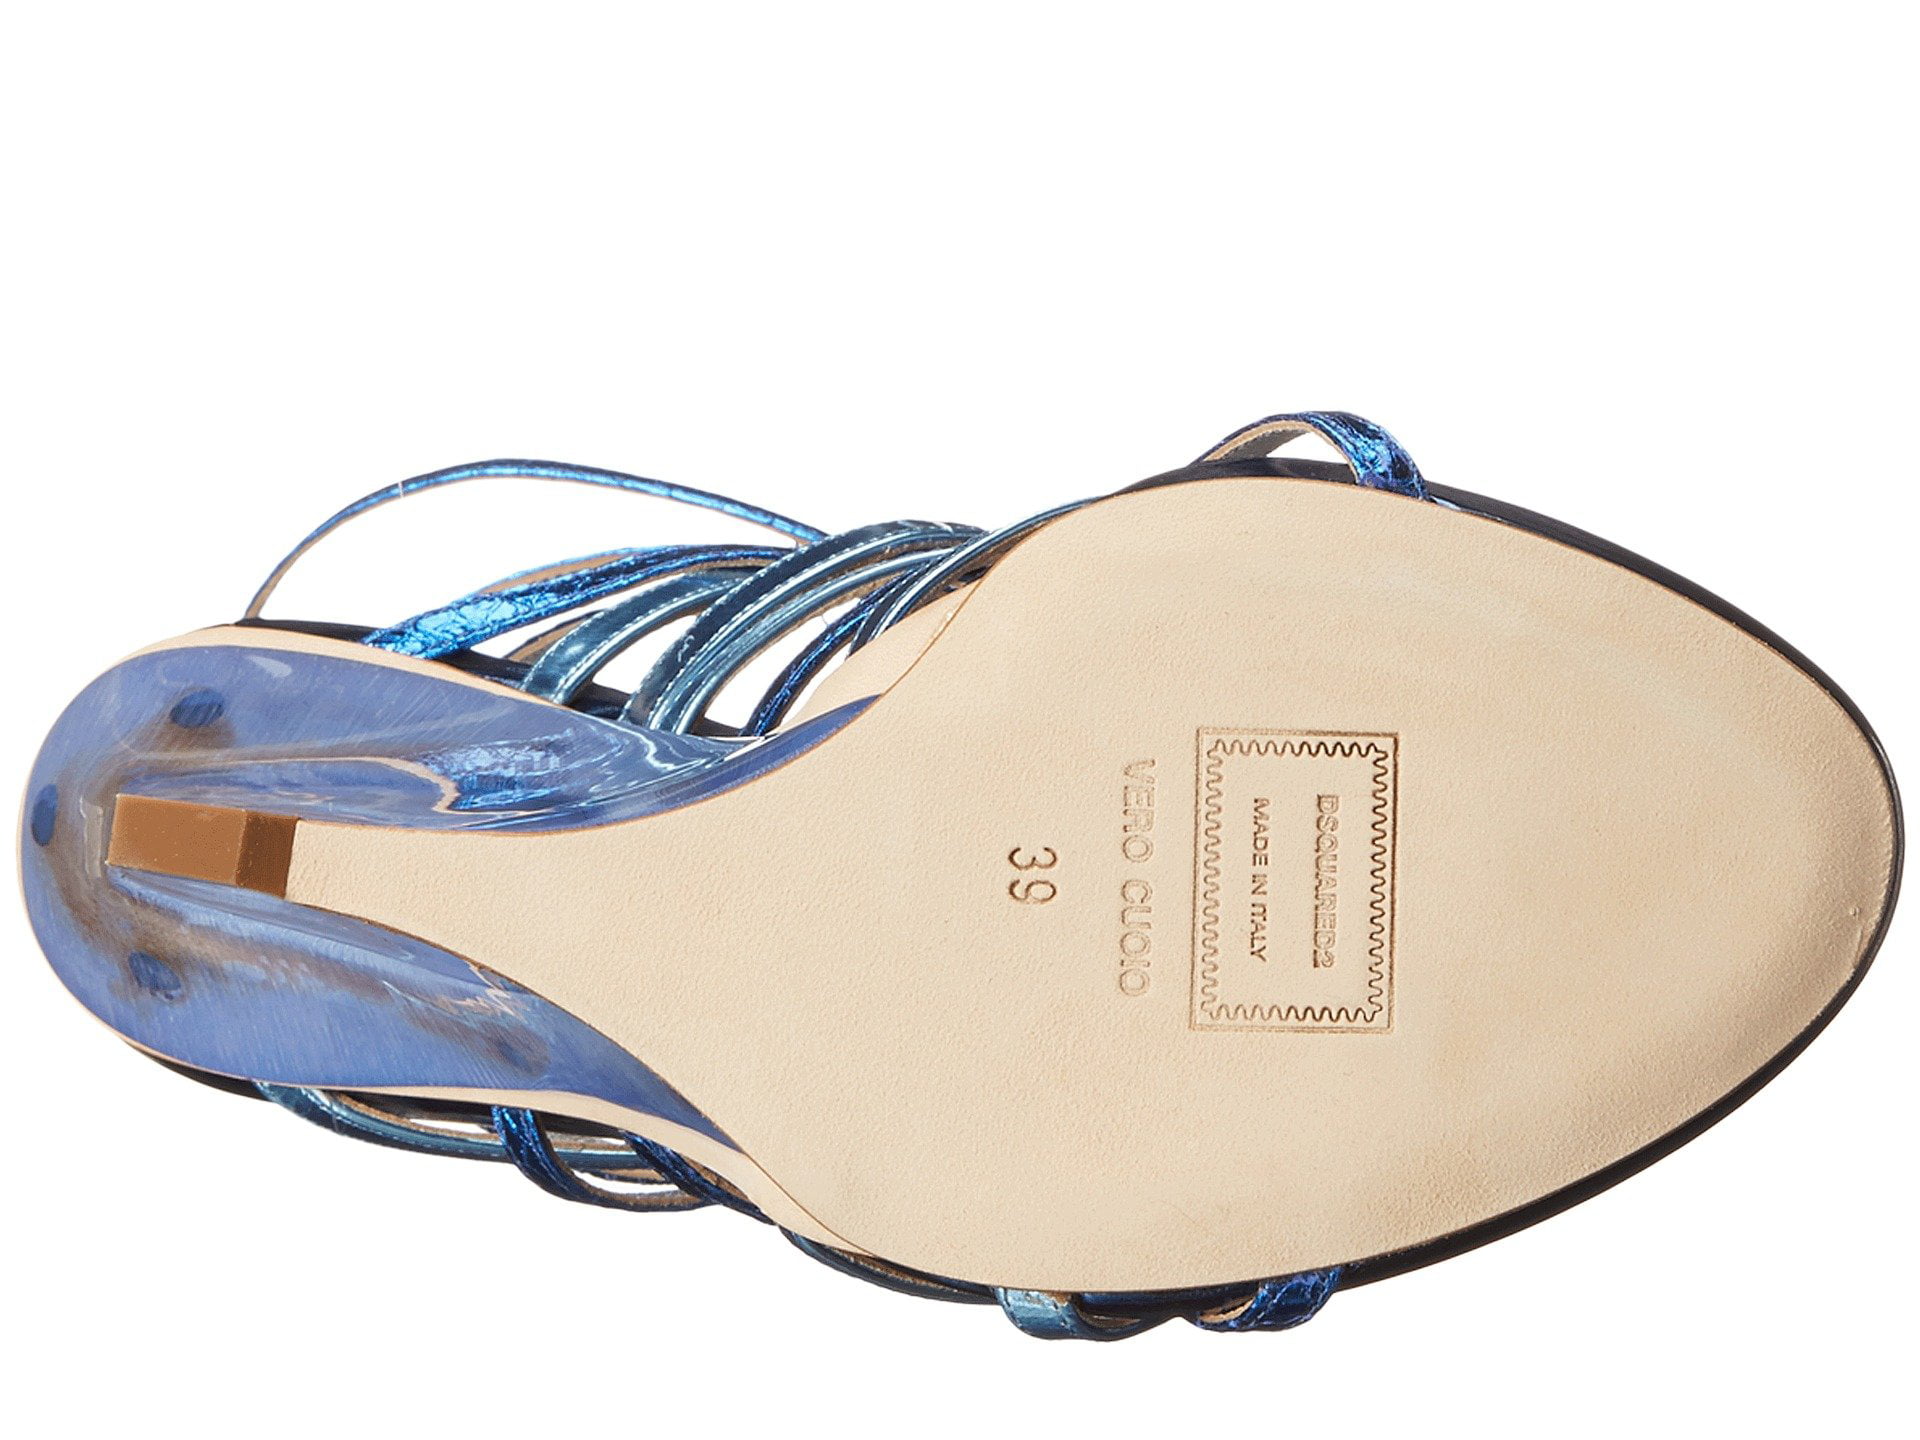 DSQUARED2 Metallic Wedge Sandal, Blue, 36 (US Women's 6) M